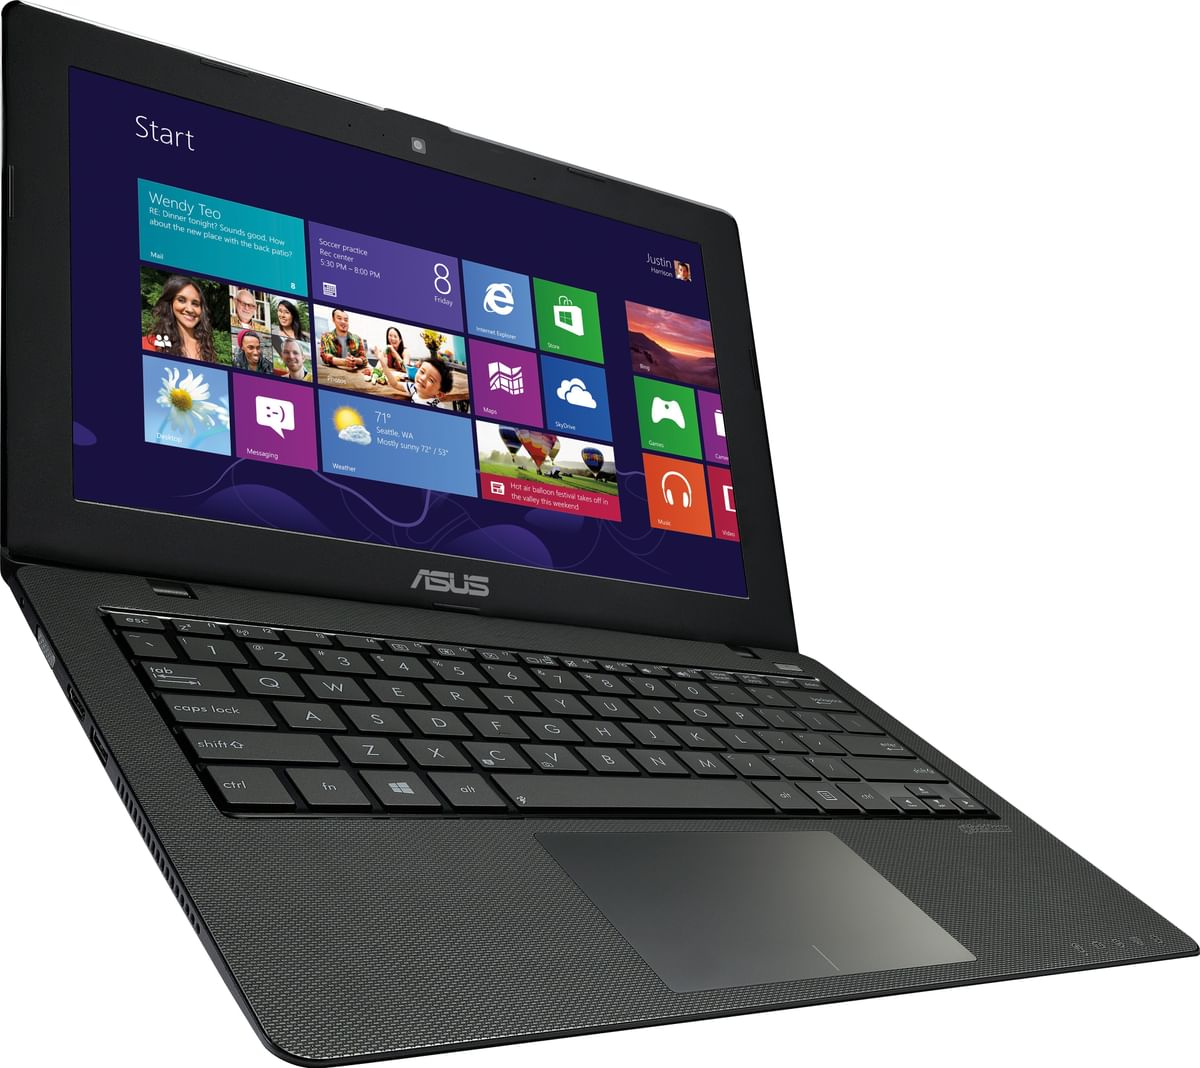 Asus X200ma Kx643d X Series Laptop Celeron Dual Core 2gb 500gb Free